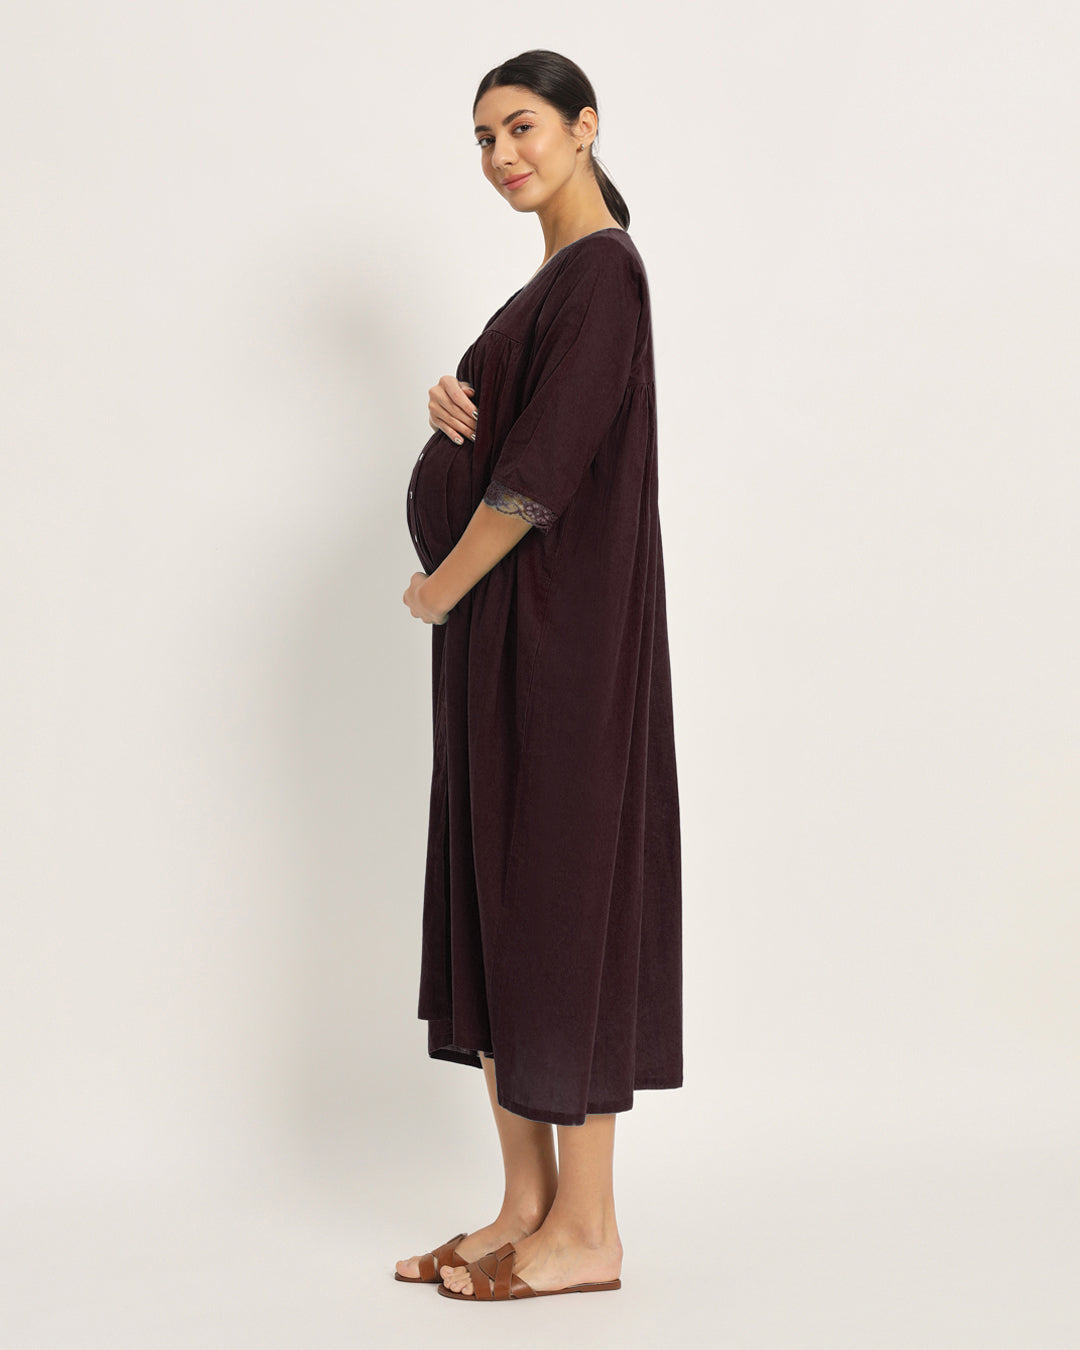 Plum Passion Preggo & Posh Maternity & Nursing Dress